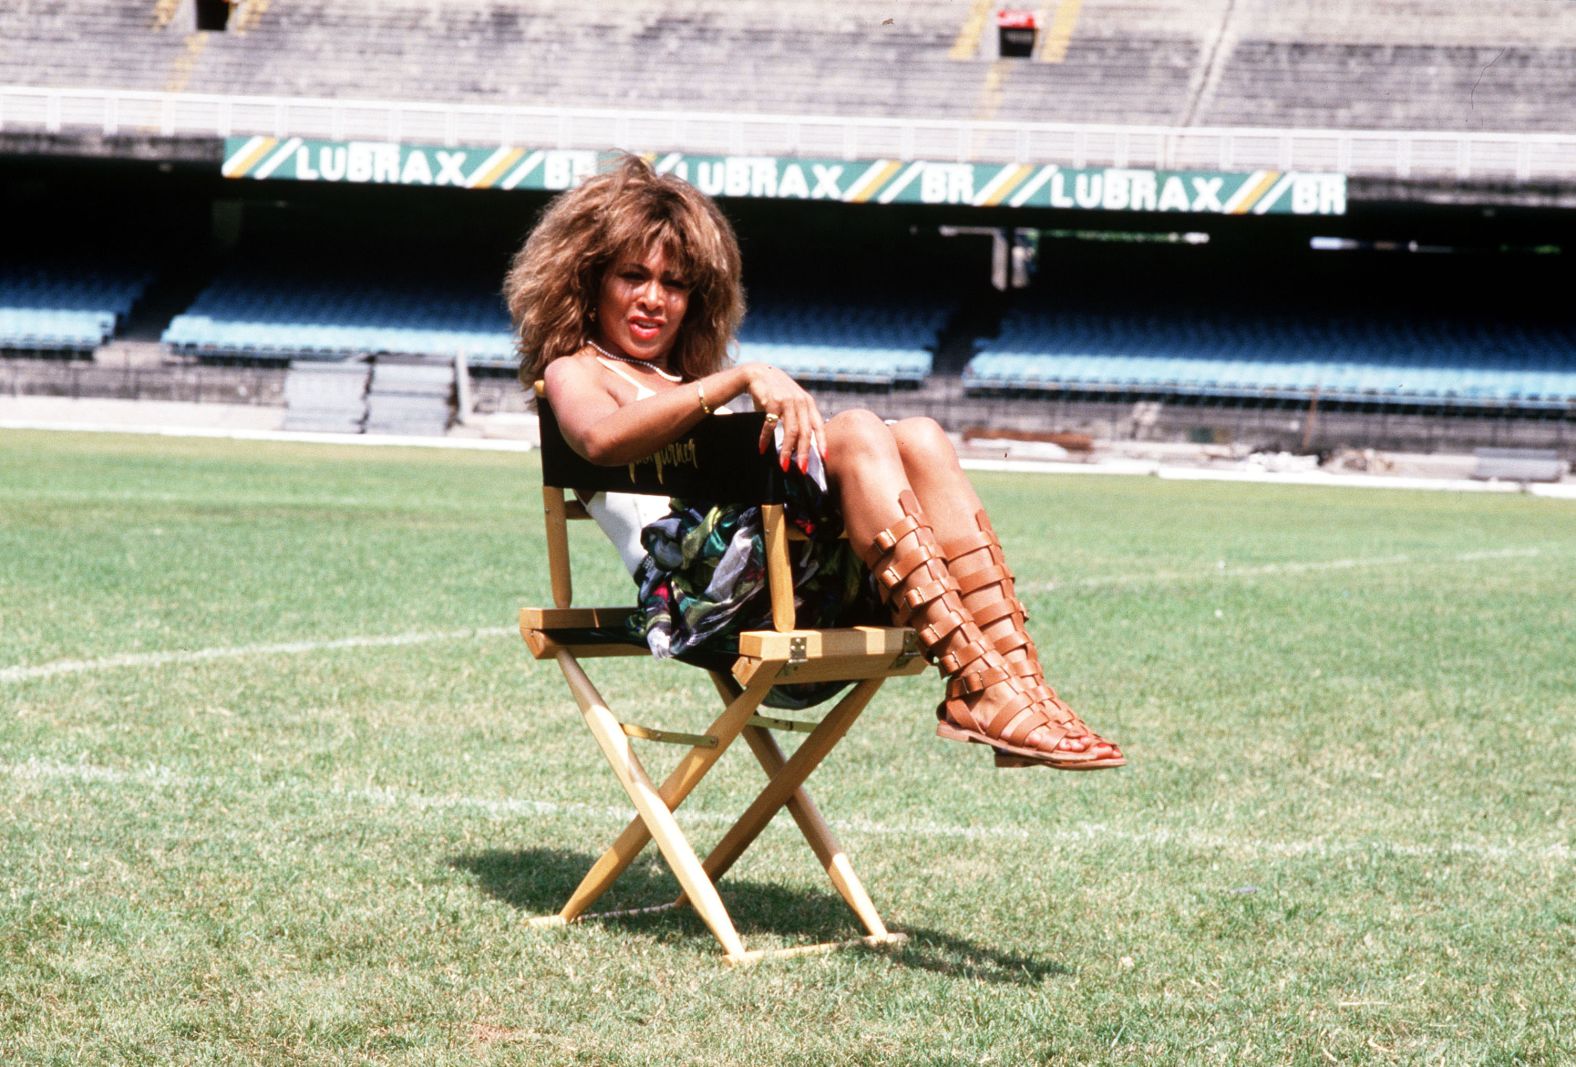 Turner sits on a soccer field in Rio de Janeiro in 1988.